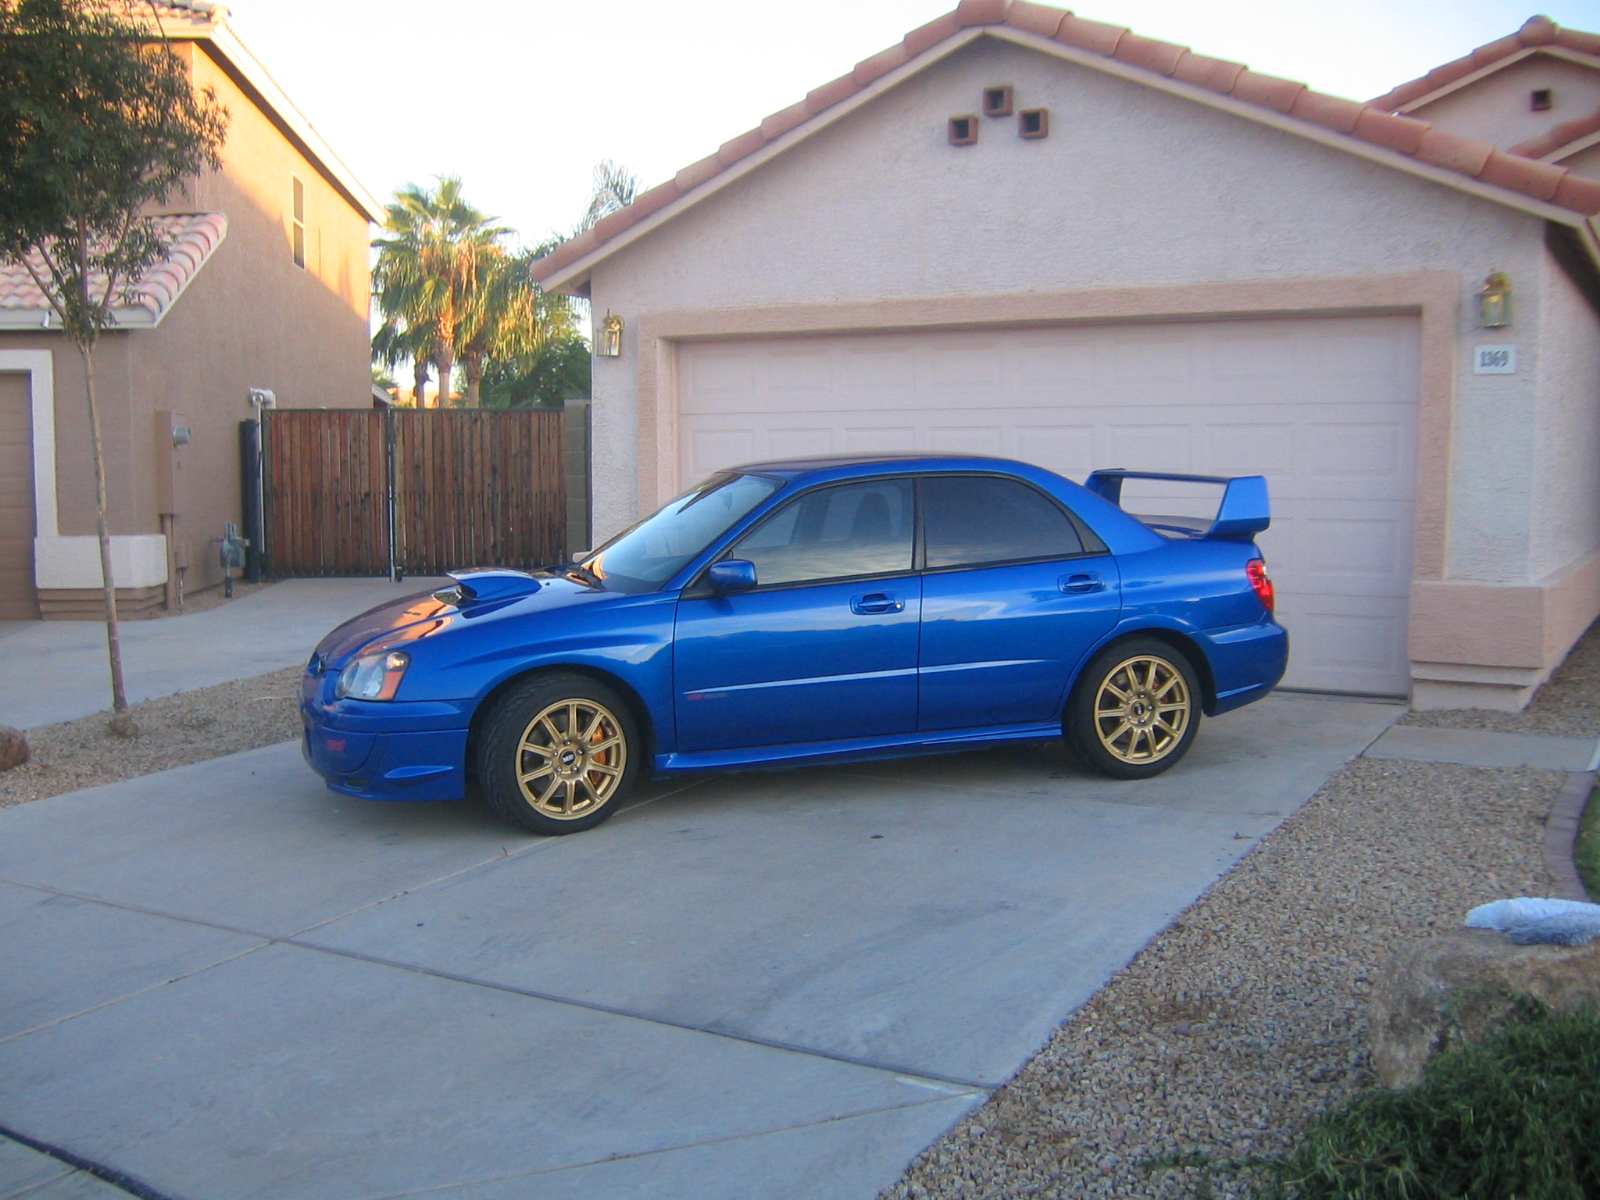 Subaru Impreza Wrx Sti Is A Blue Car For Sale